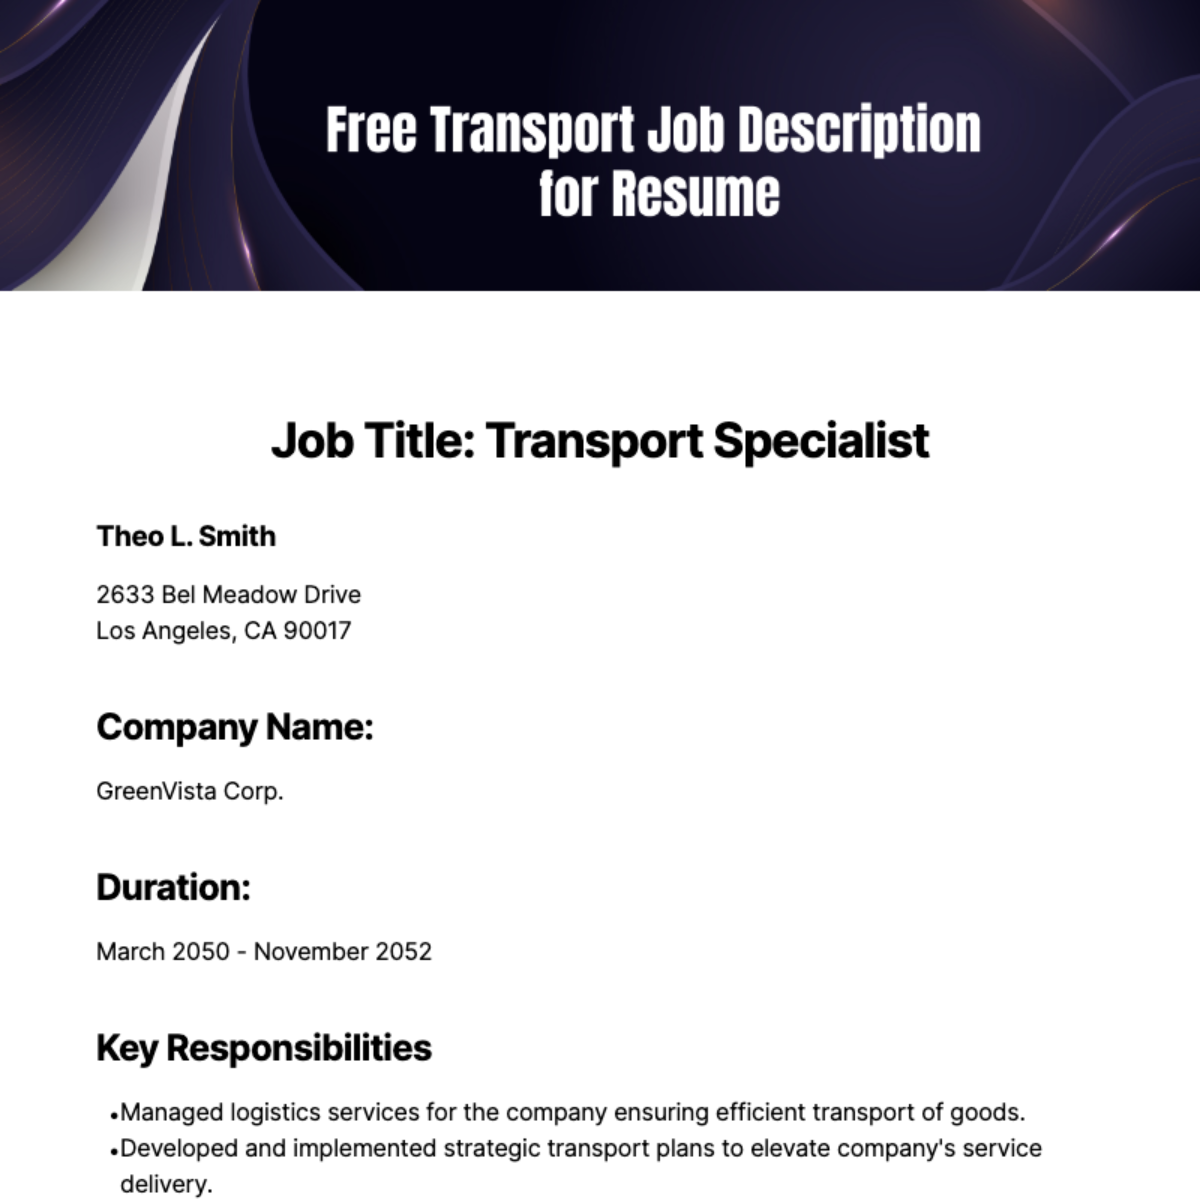 Free Transport Job Description for Resume Template